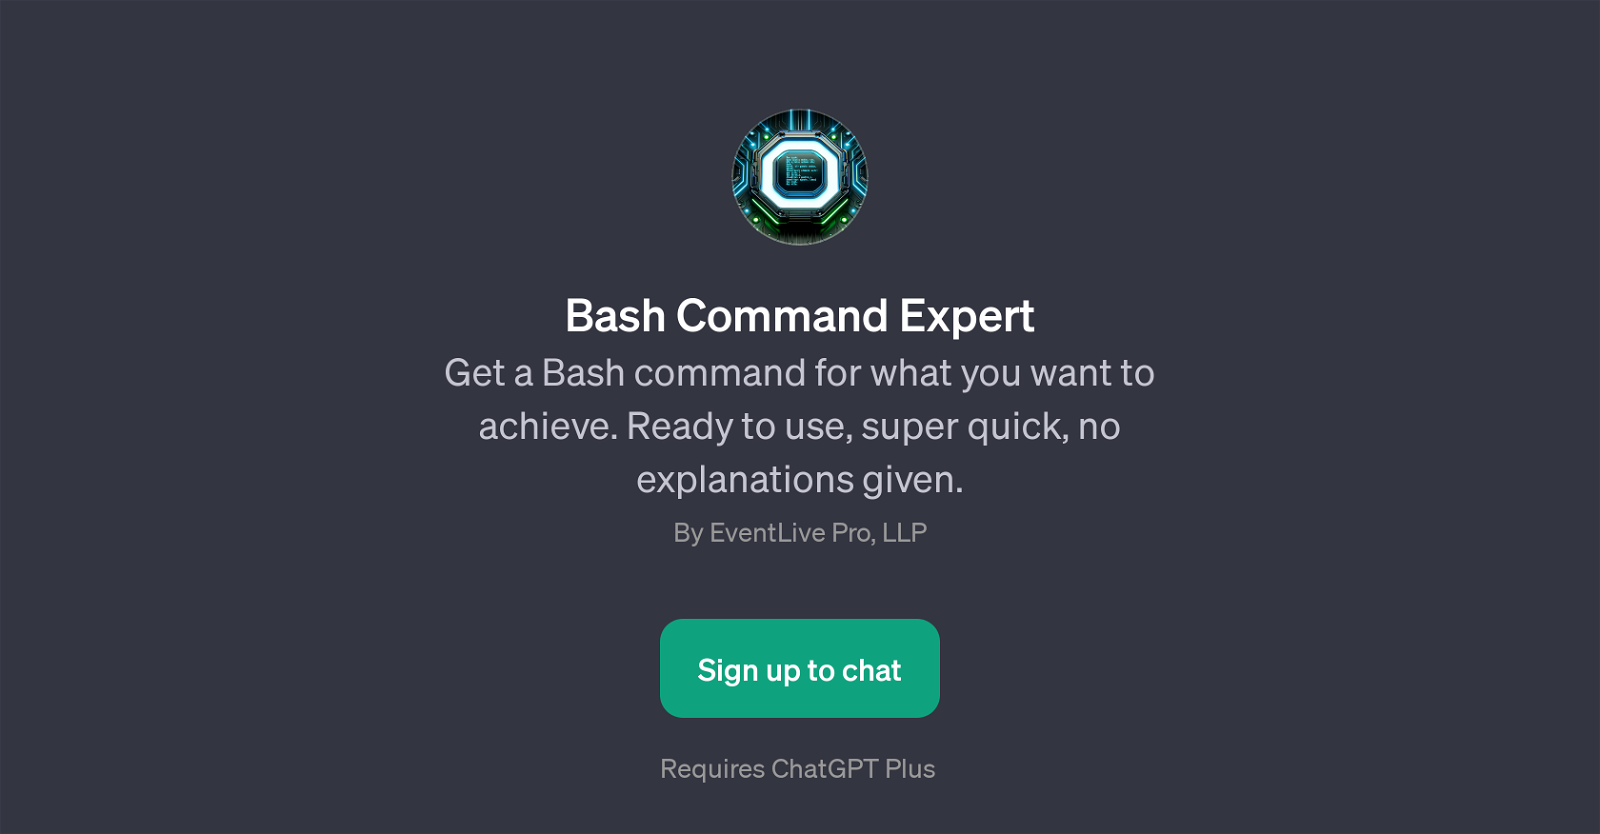 Bash Command Expert website